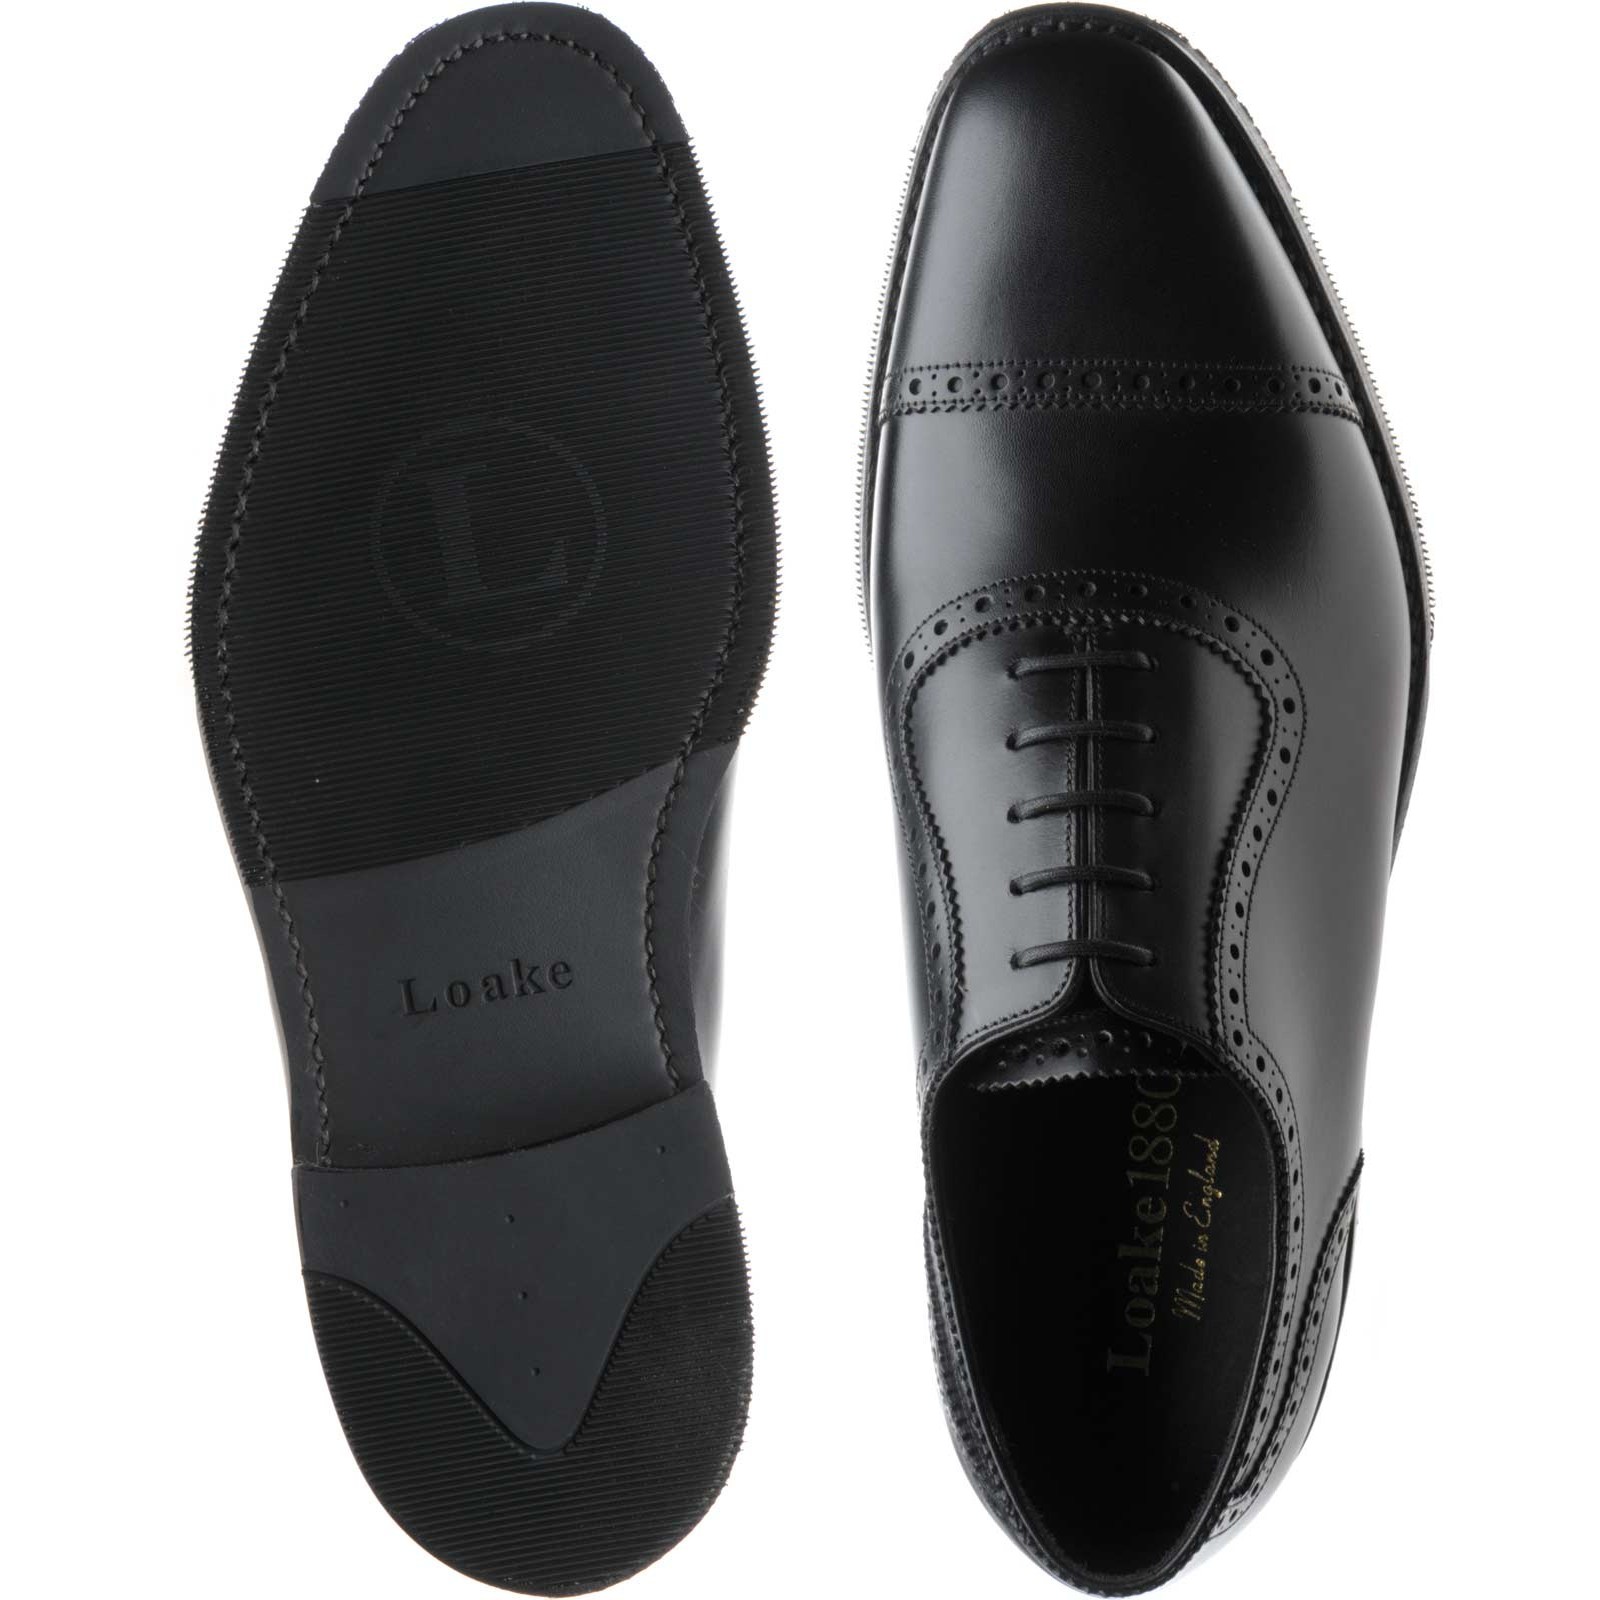 Loake shoes | Loake 1880 Classic | Fleet rubber-soled semi-brogues in ...